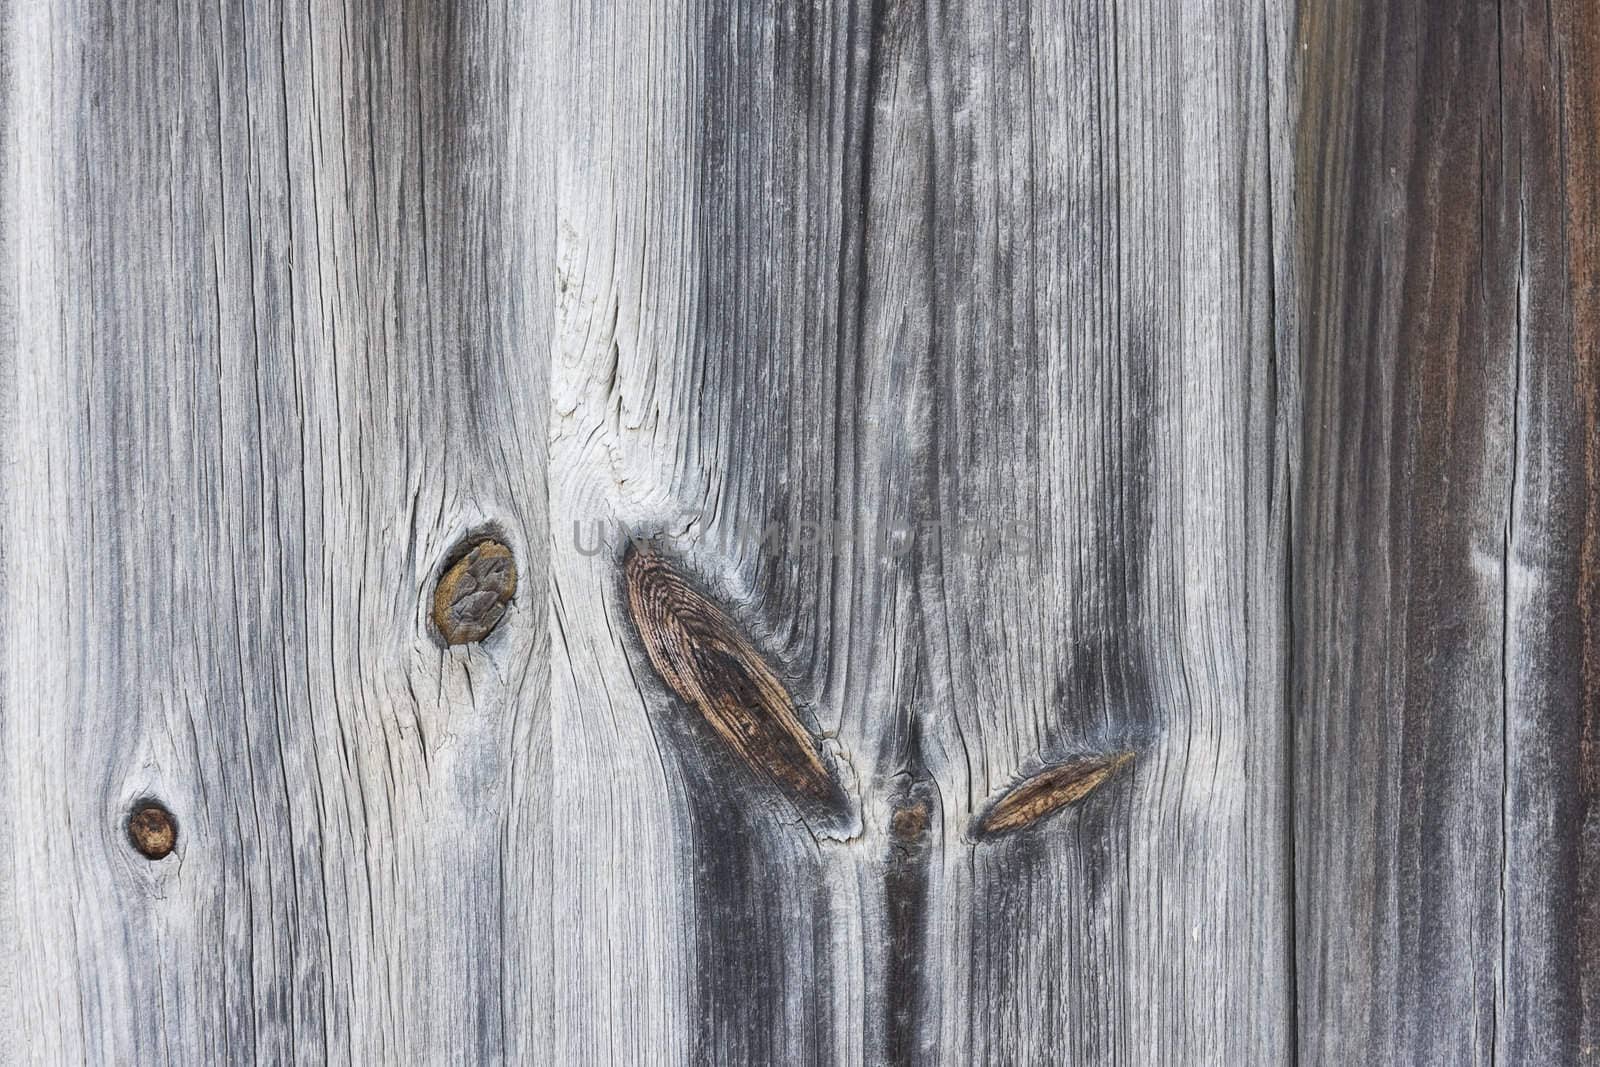 Aged wood texture by rozhenyuk